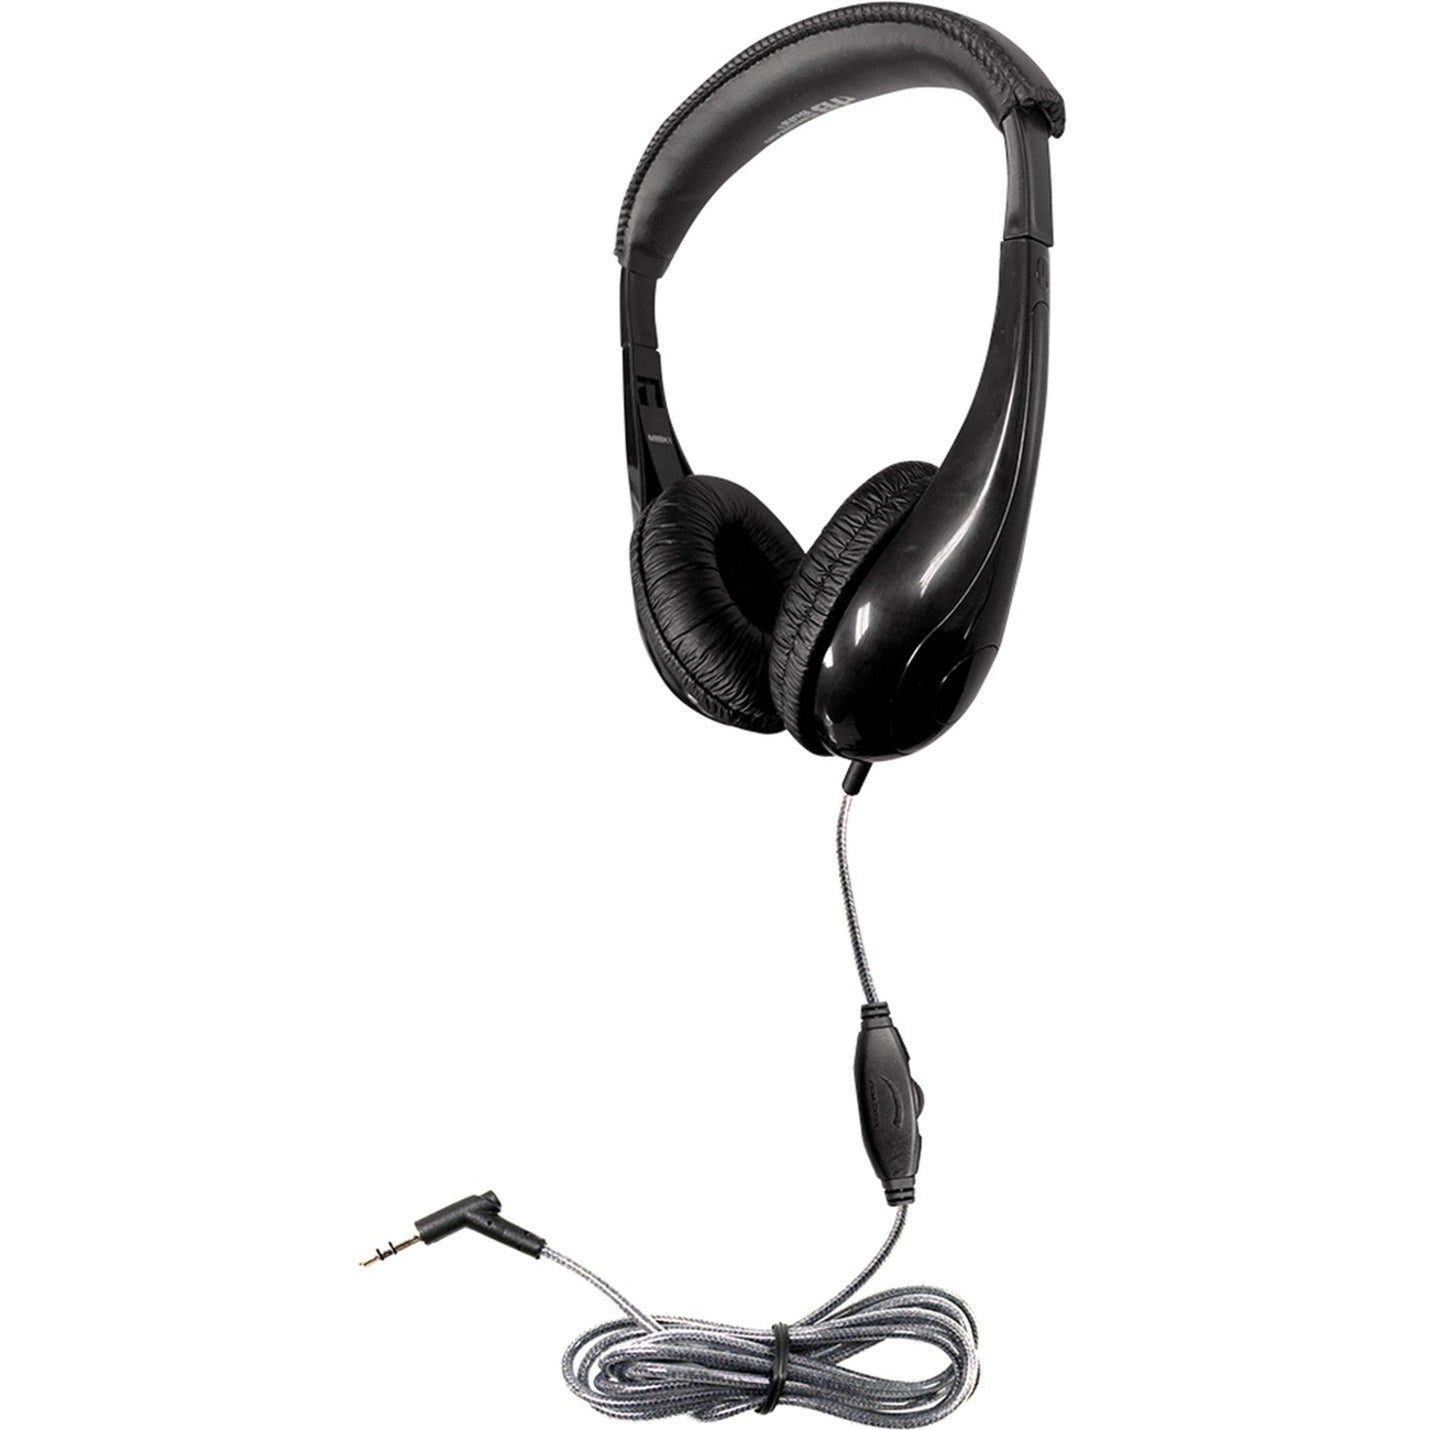 Hamilton Buhl M8BK1 Motiv8™ Mid-Sized Headphone with In-line Volume Control, Lightweight, Comfortable, Adjustable Headband